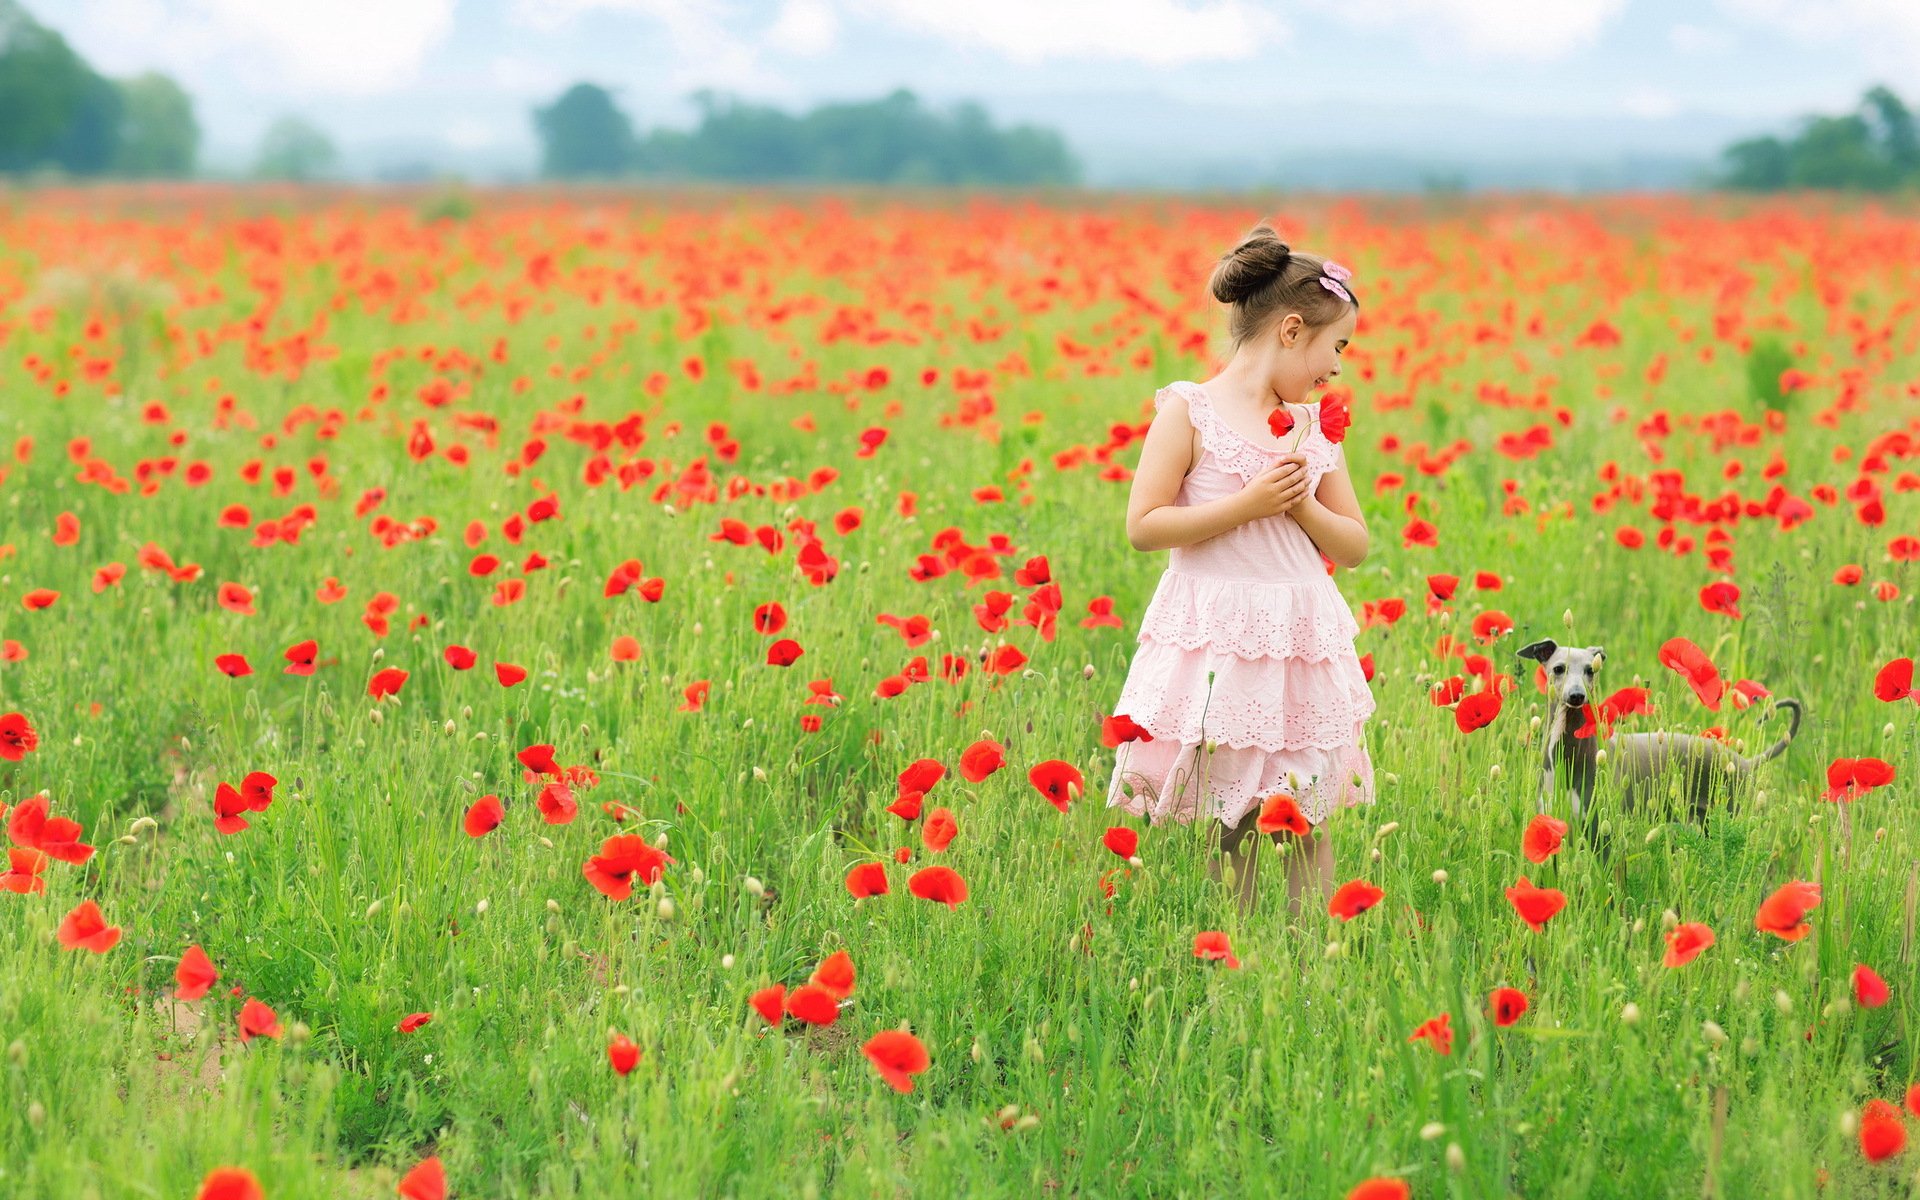 Field children. Девушка в поле. Девушка в цветочном поле. Девочка в поле с маками. Ребенок в поле цветов.